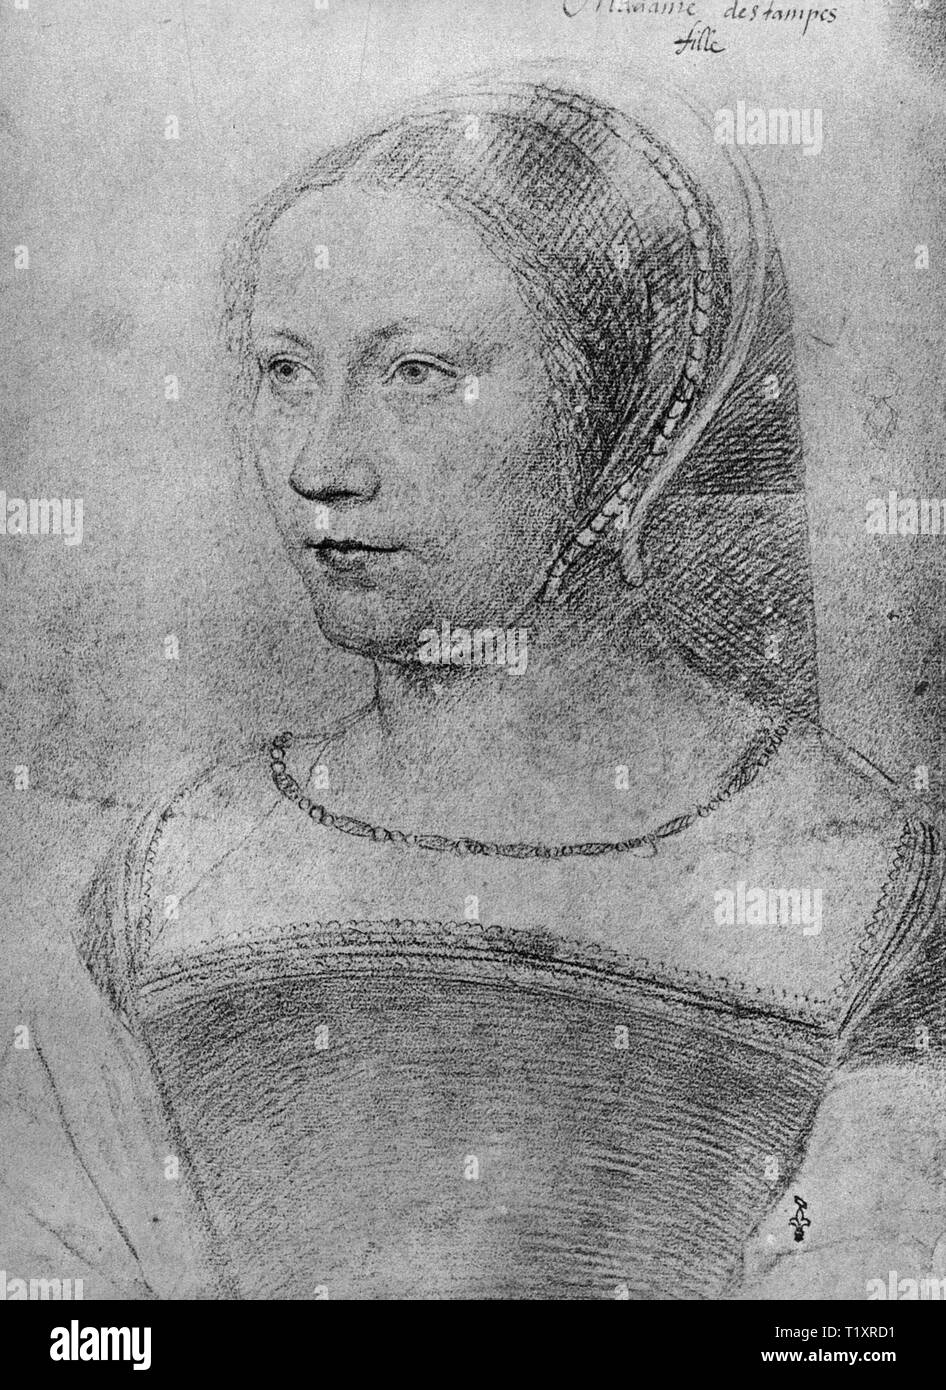 Bildende Kunst, Jean Clouet (1480-1541), Zeichnung, Diane de Poitiers in jüngeren Jahren, 'Madame destampes, fille", Anfang des 16. Jahrhunderts, Additional-Rights - Clearance-Info - Not-Available Stockfoto